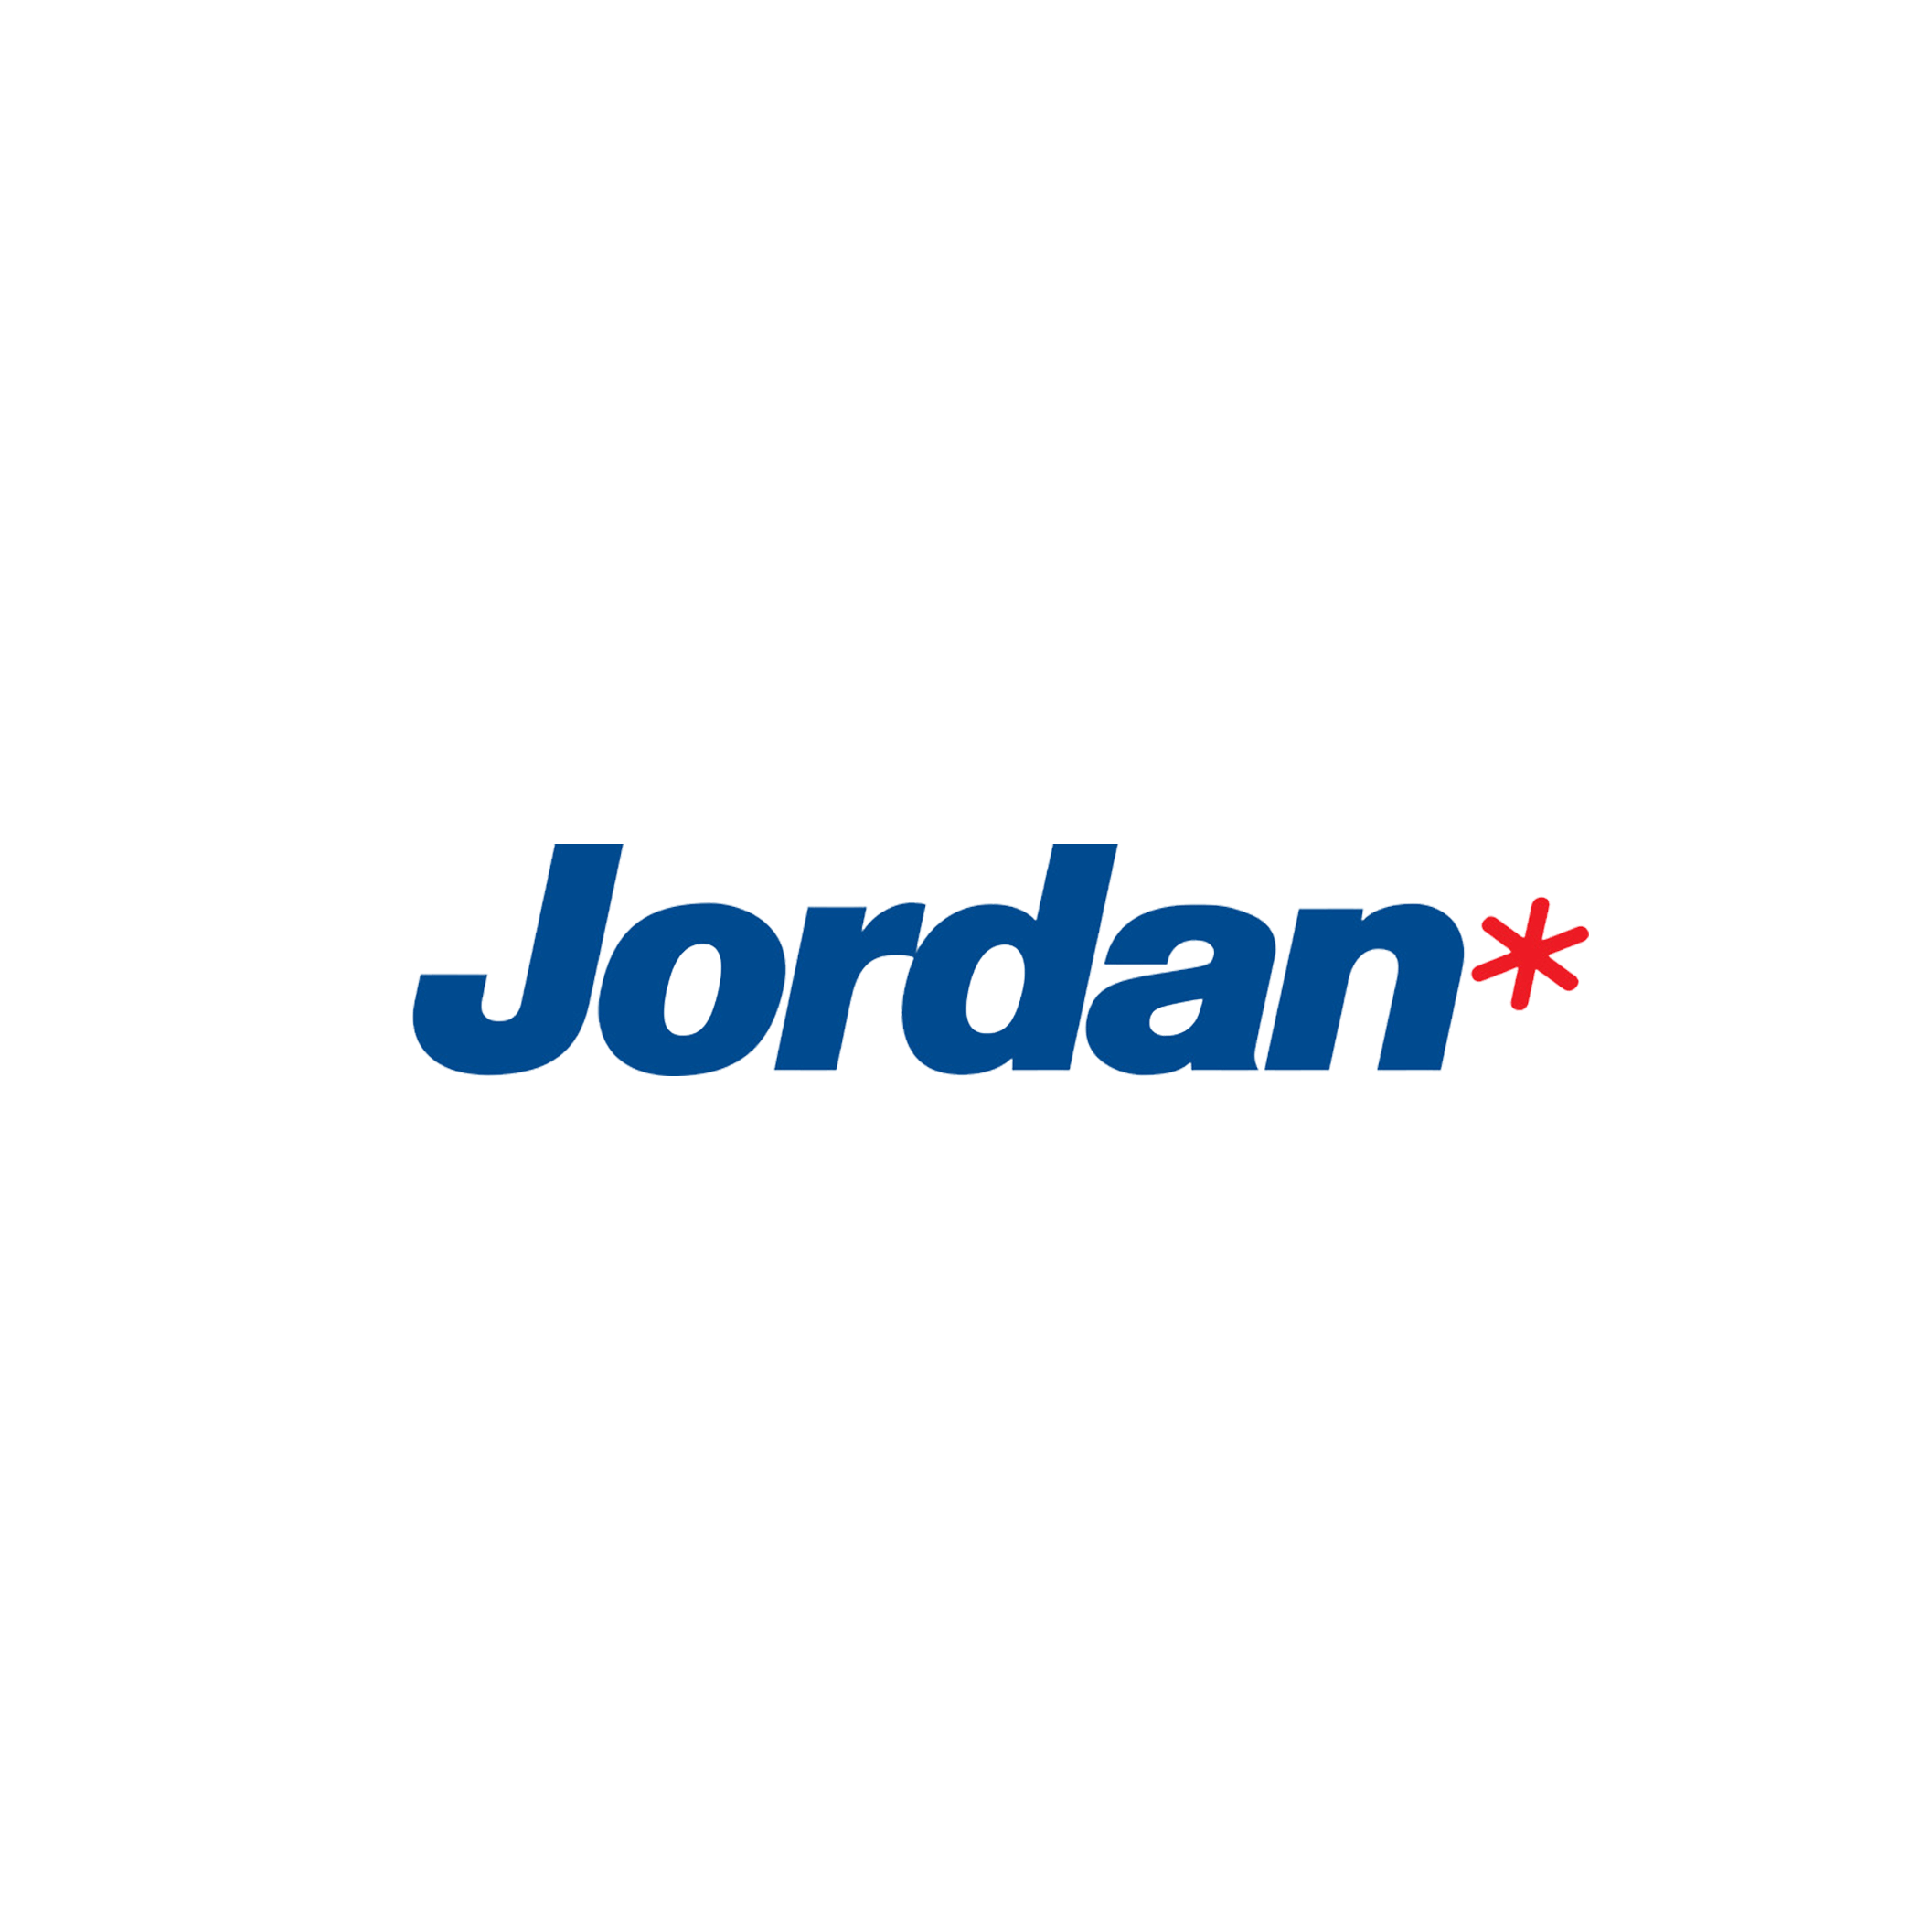 Product Brand: Jordan